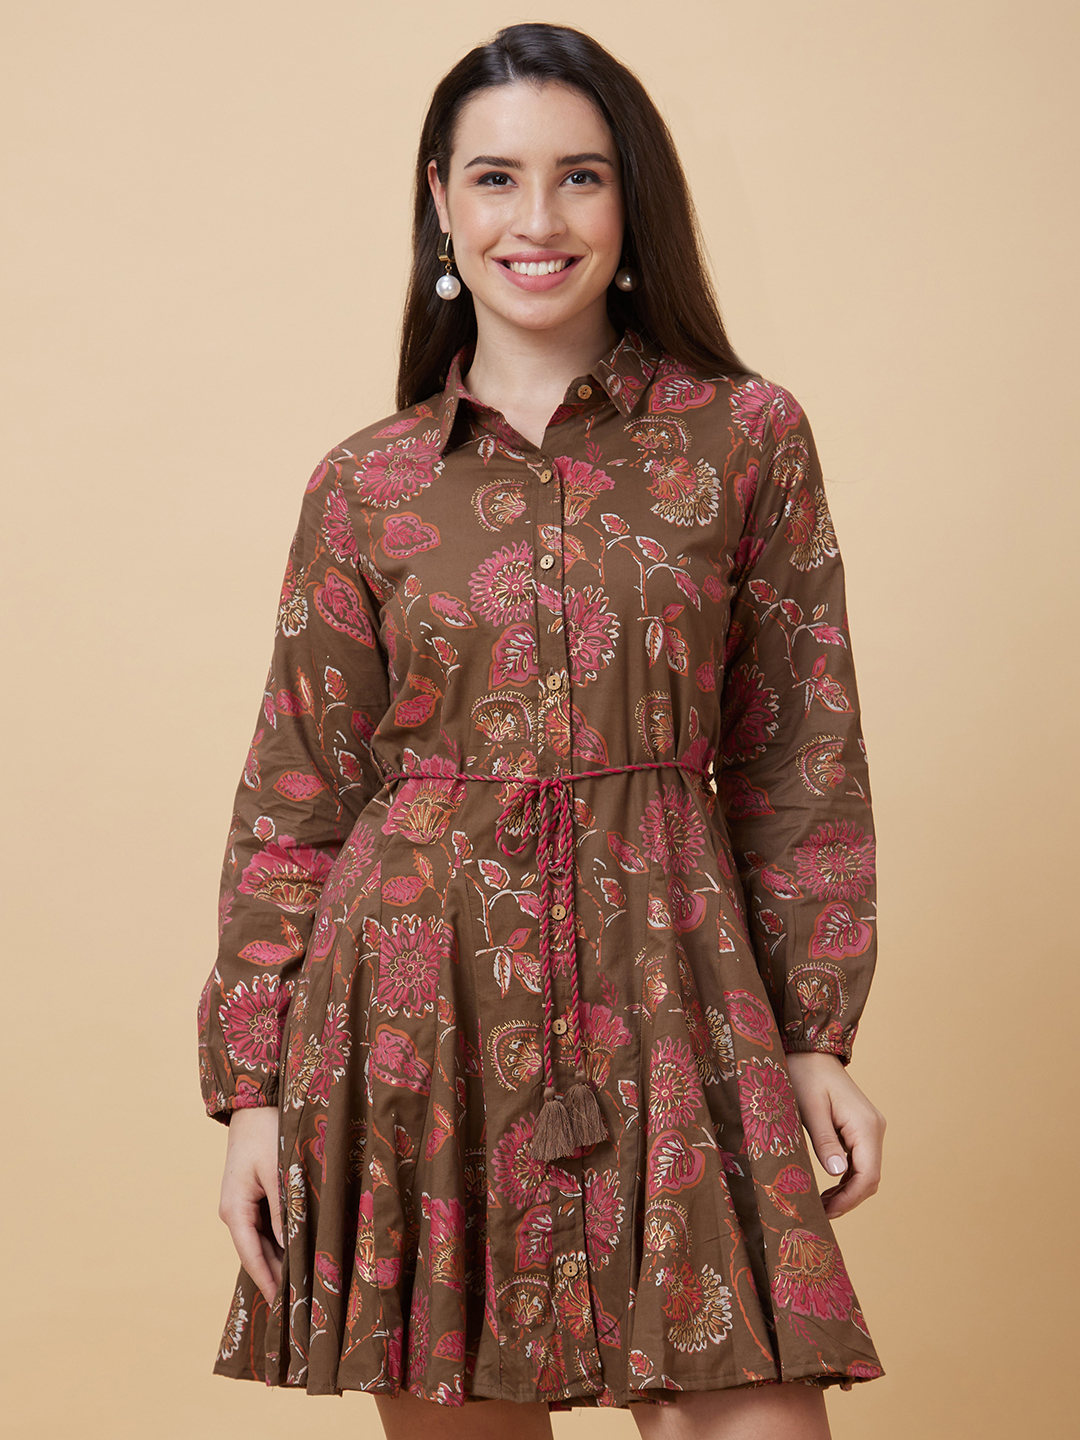 Globus Women Brown Floral Print Shirt Collar Casual Godet A-Line Belted Dress